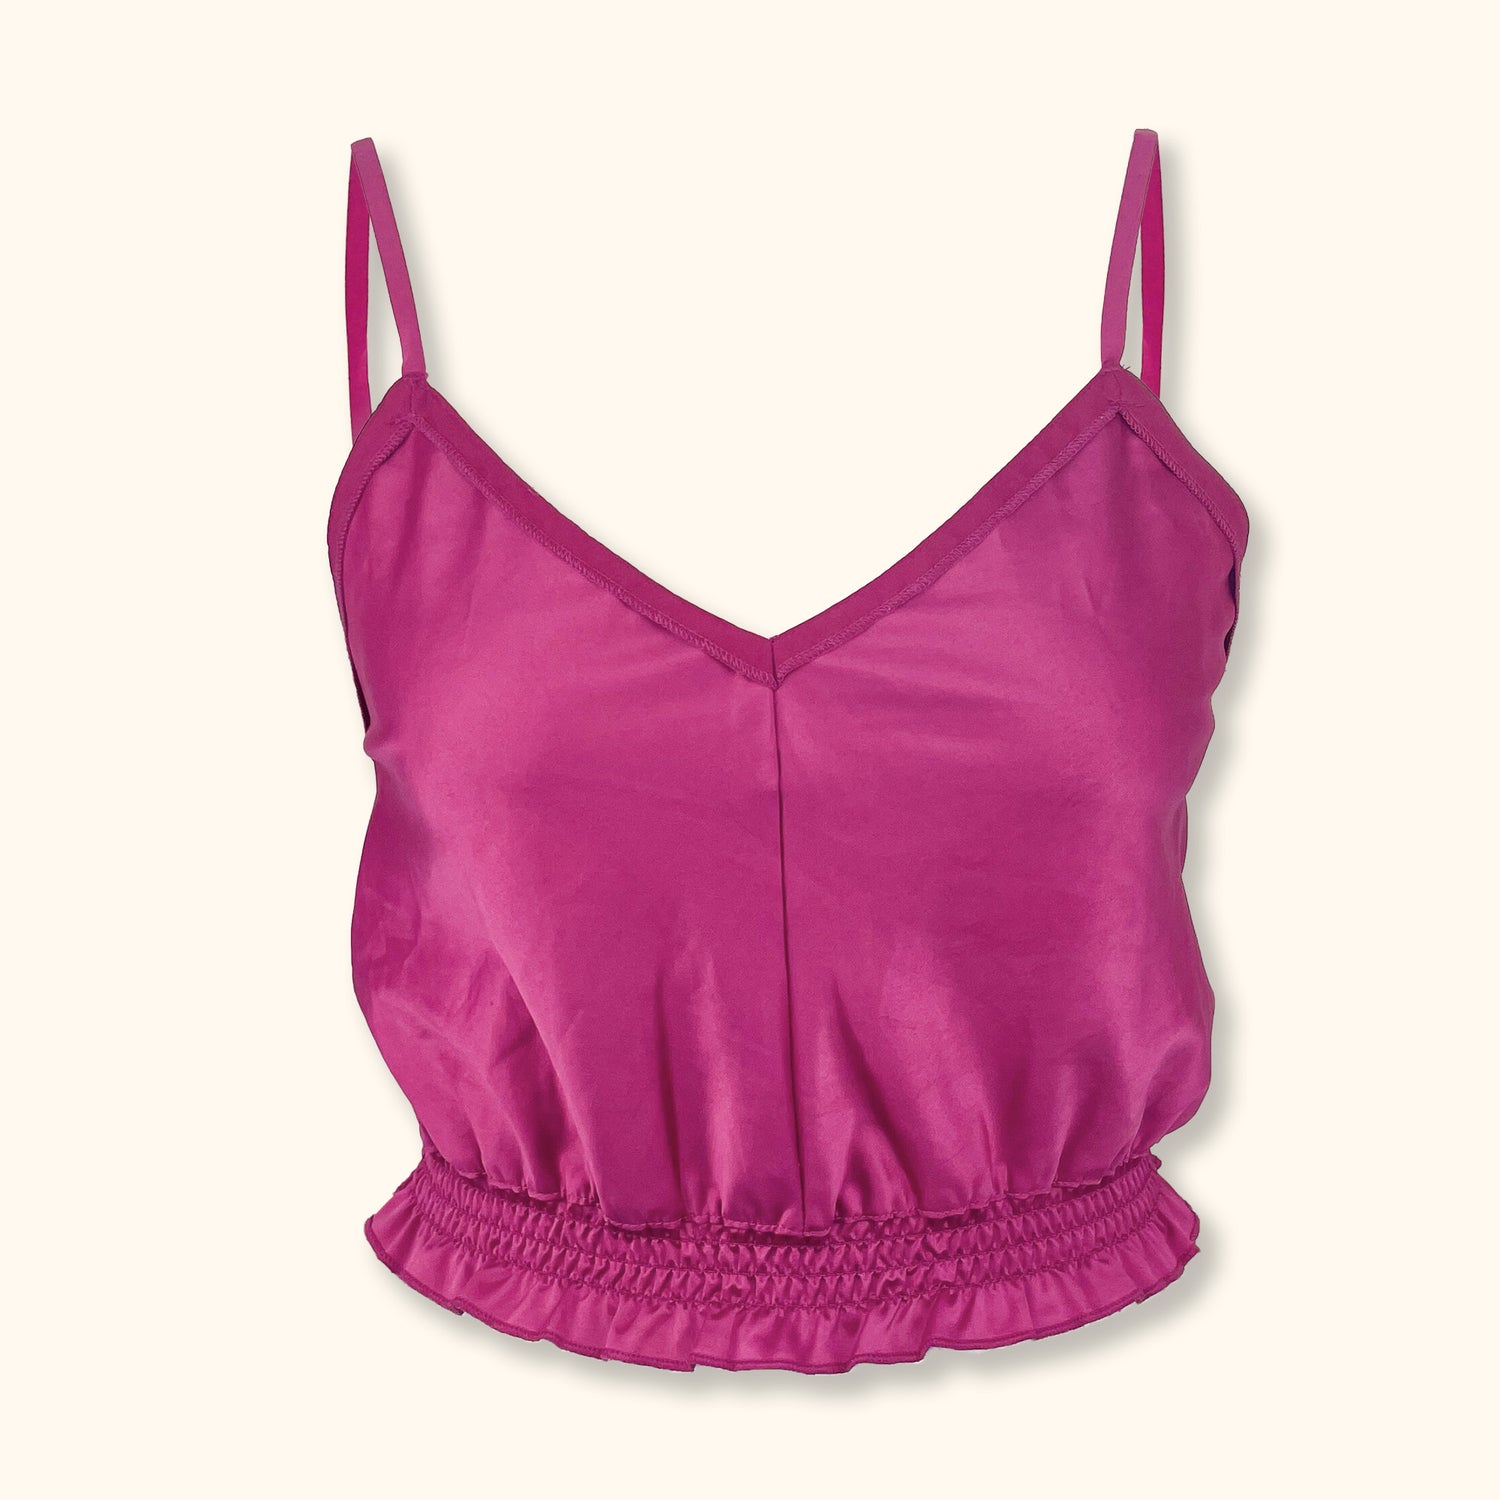 Zara Pink Satin Ruffle Crop Top - Size Small - Zara - Tops &amp; Shirts